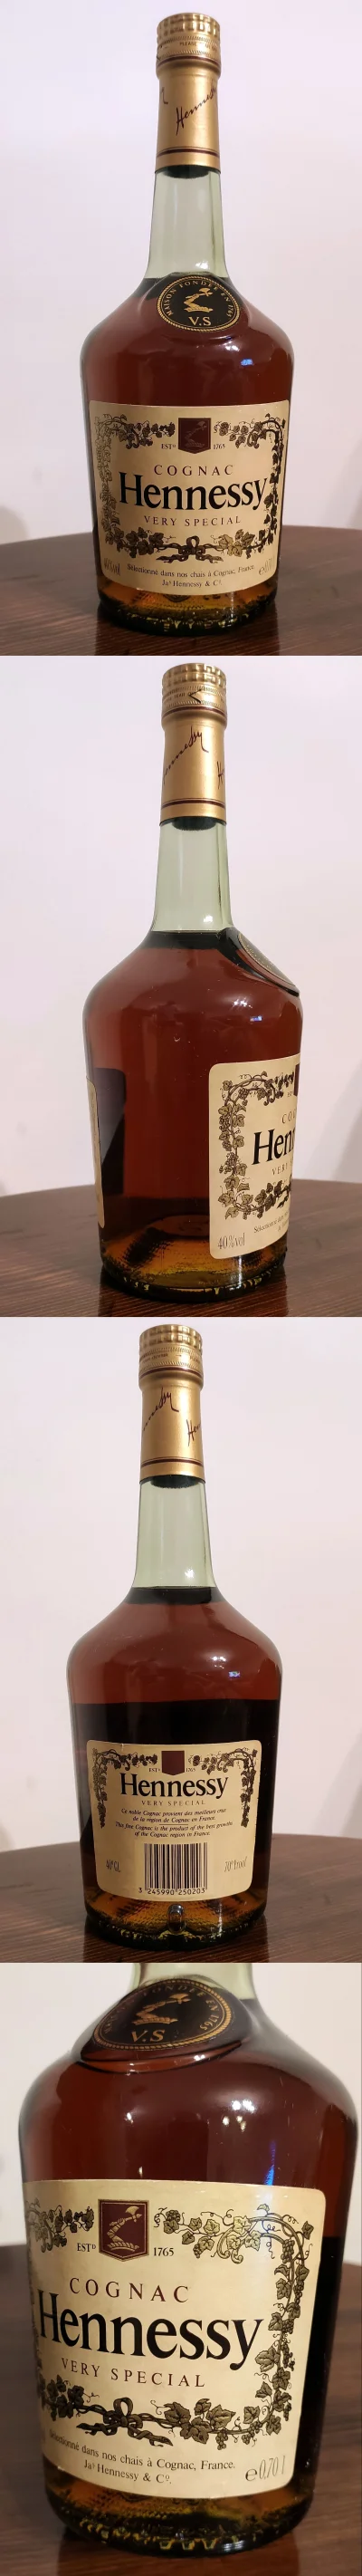 tomilipin - Hennessy Cognac - francuski koniak

Brak banderoli, butelka o pojemności ...